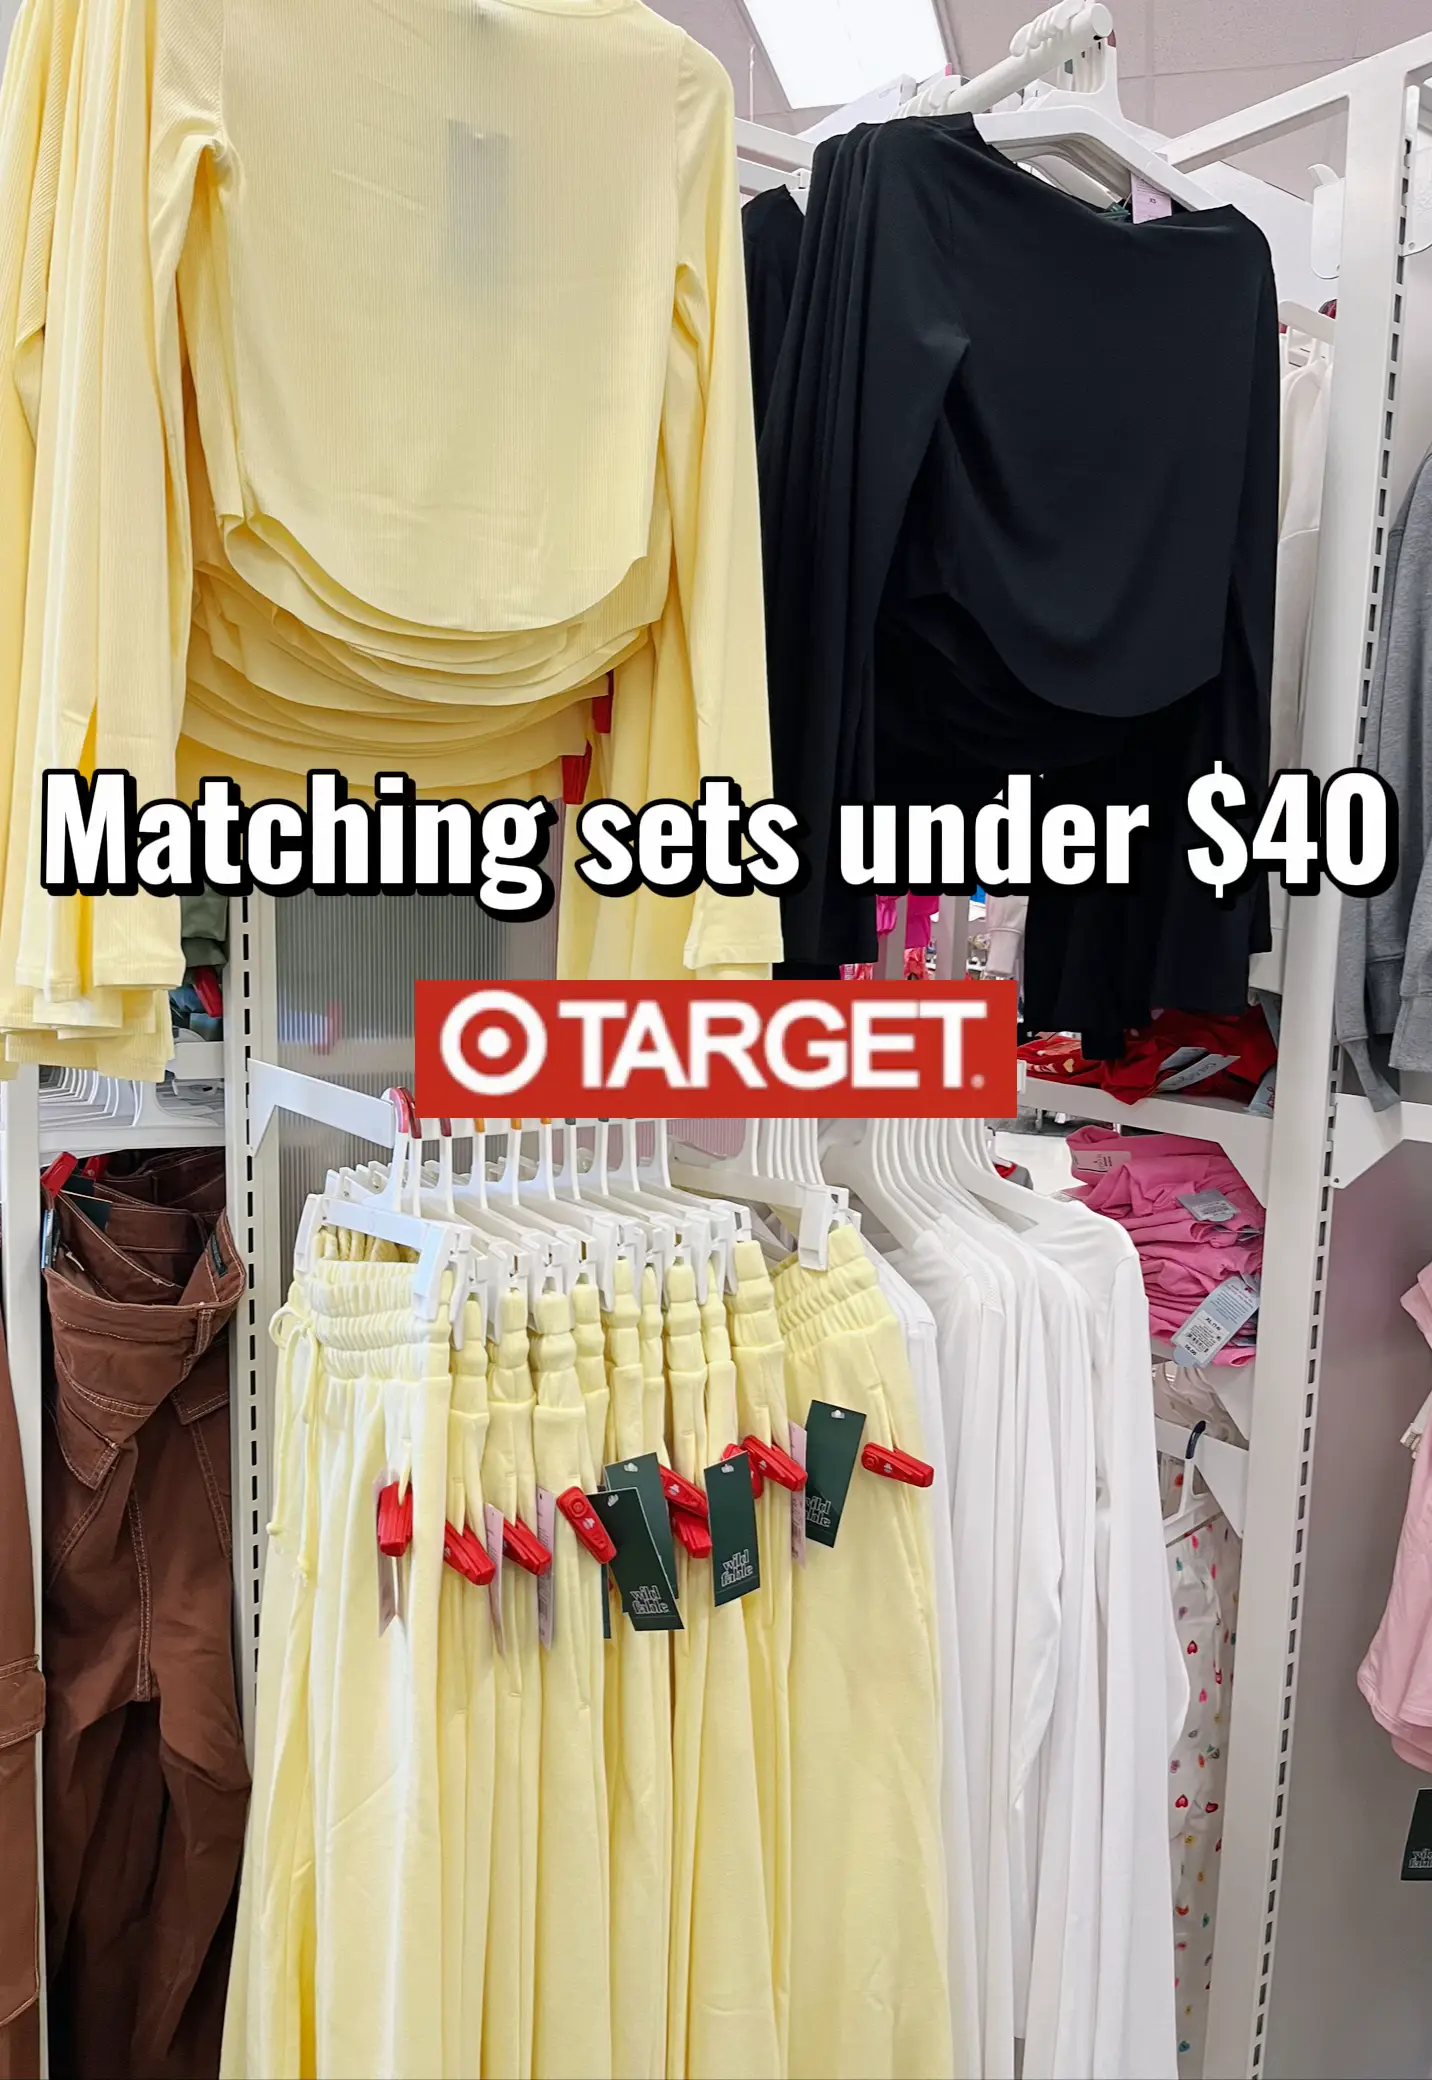 Matching Loungewear Sets from Target